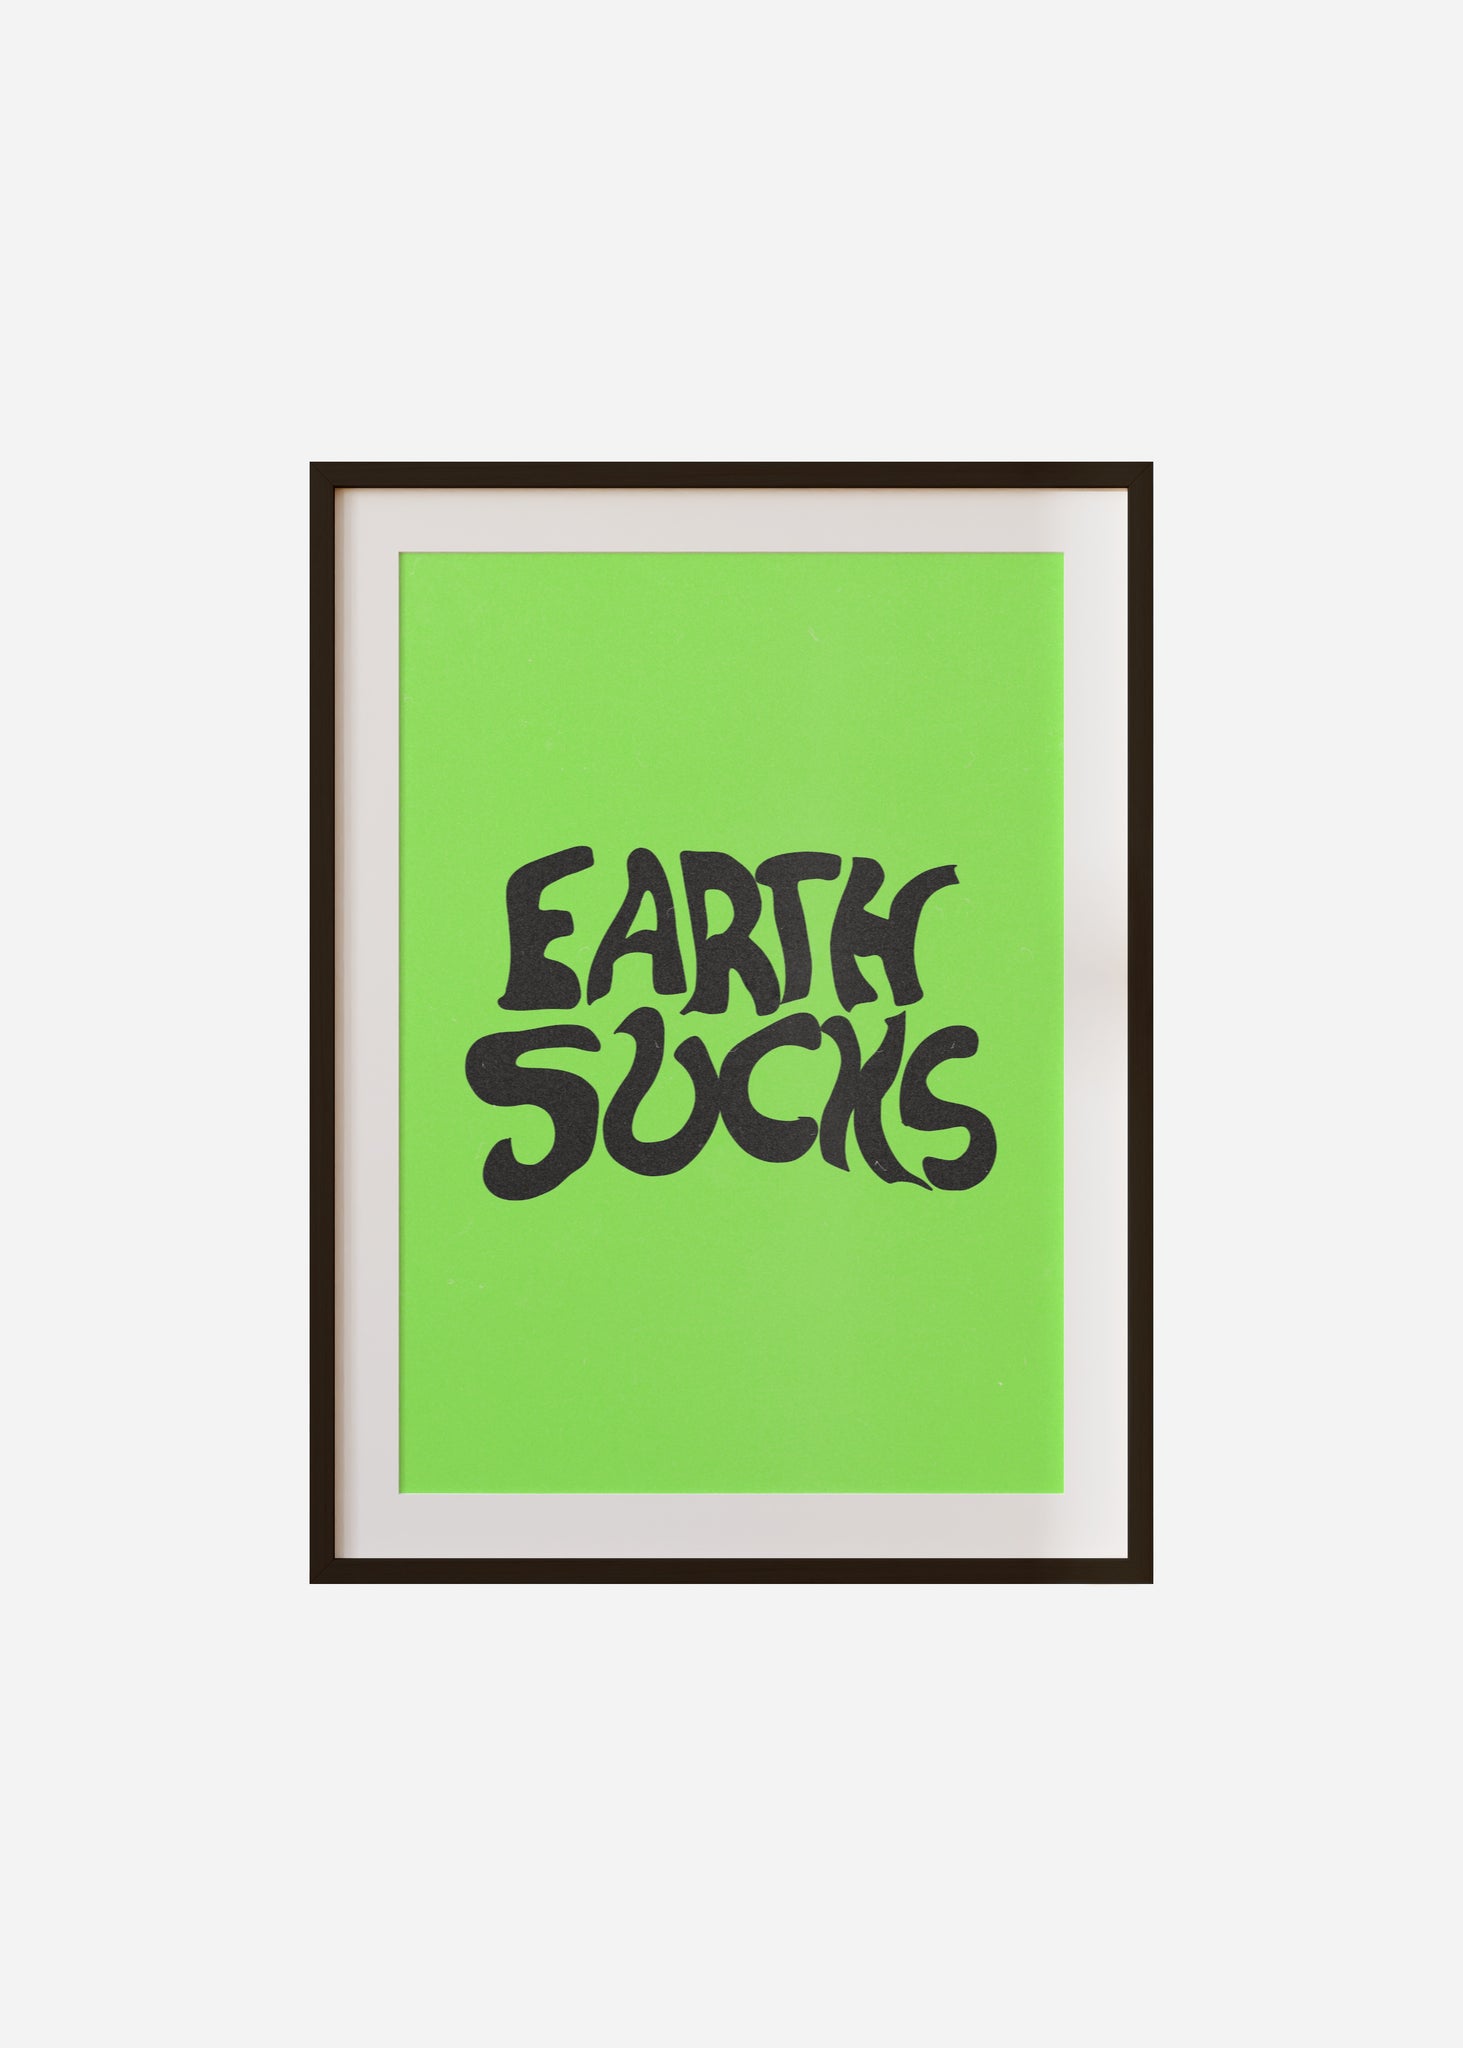 earth sucks Framed & Mounted Print